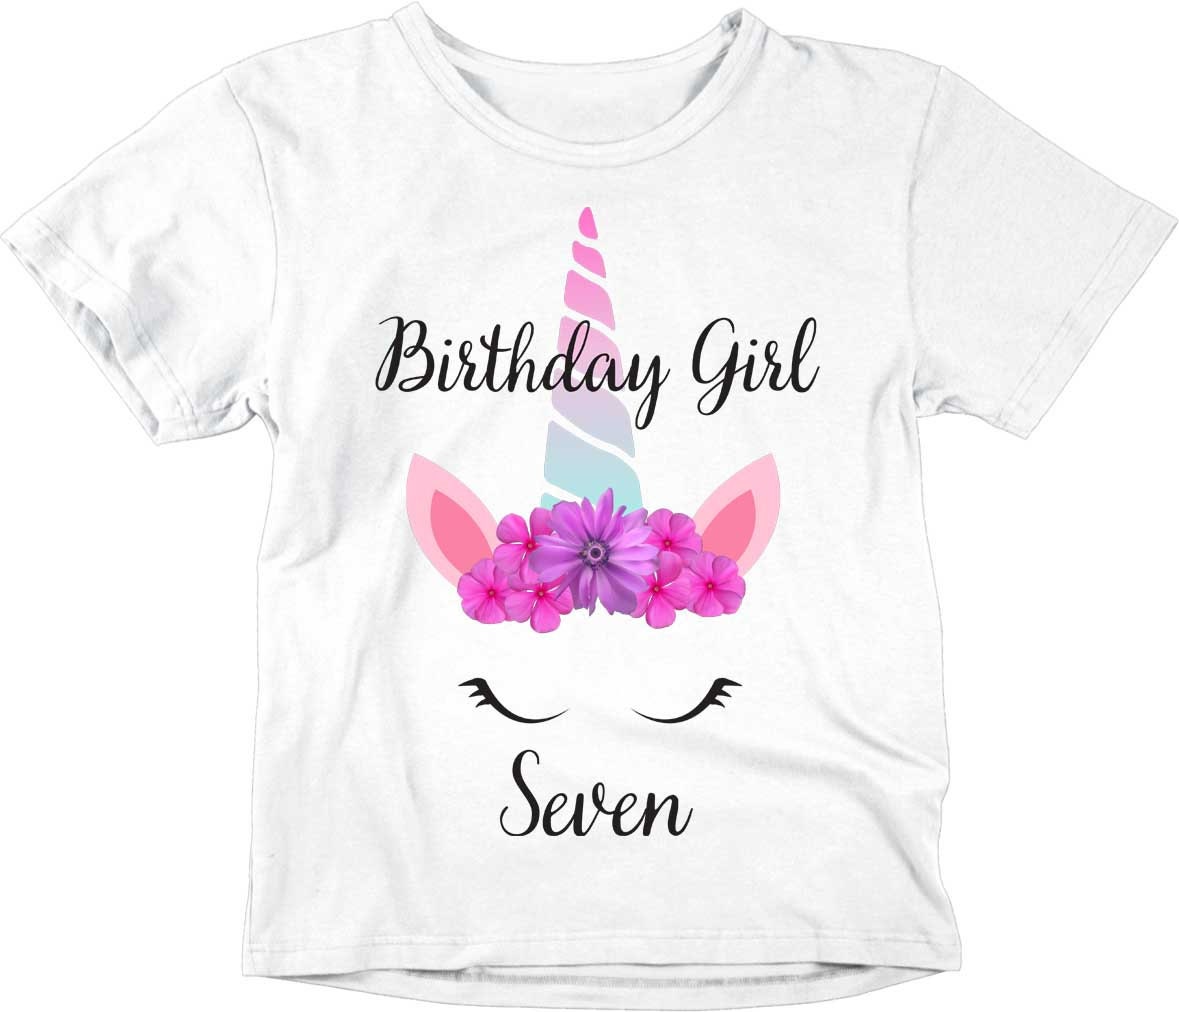 7th Birthday Girl T-Shirt Kids Unicorn Girls 7th Birthday Outfit - Purple Fox Gifts